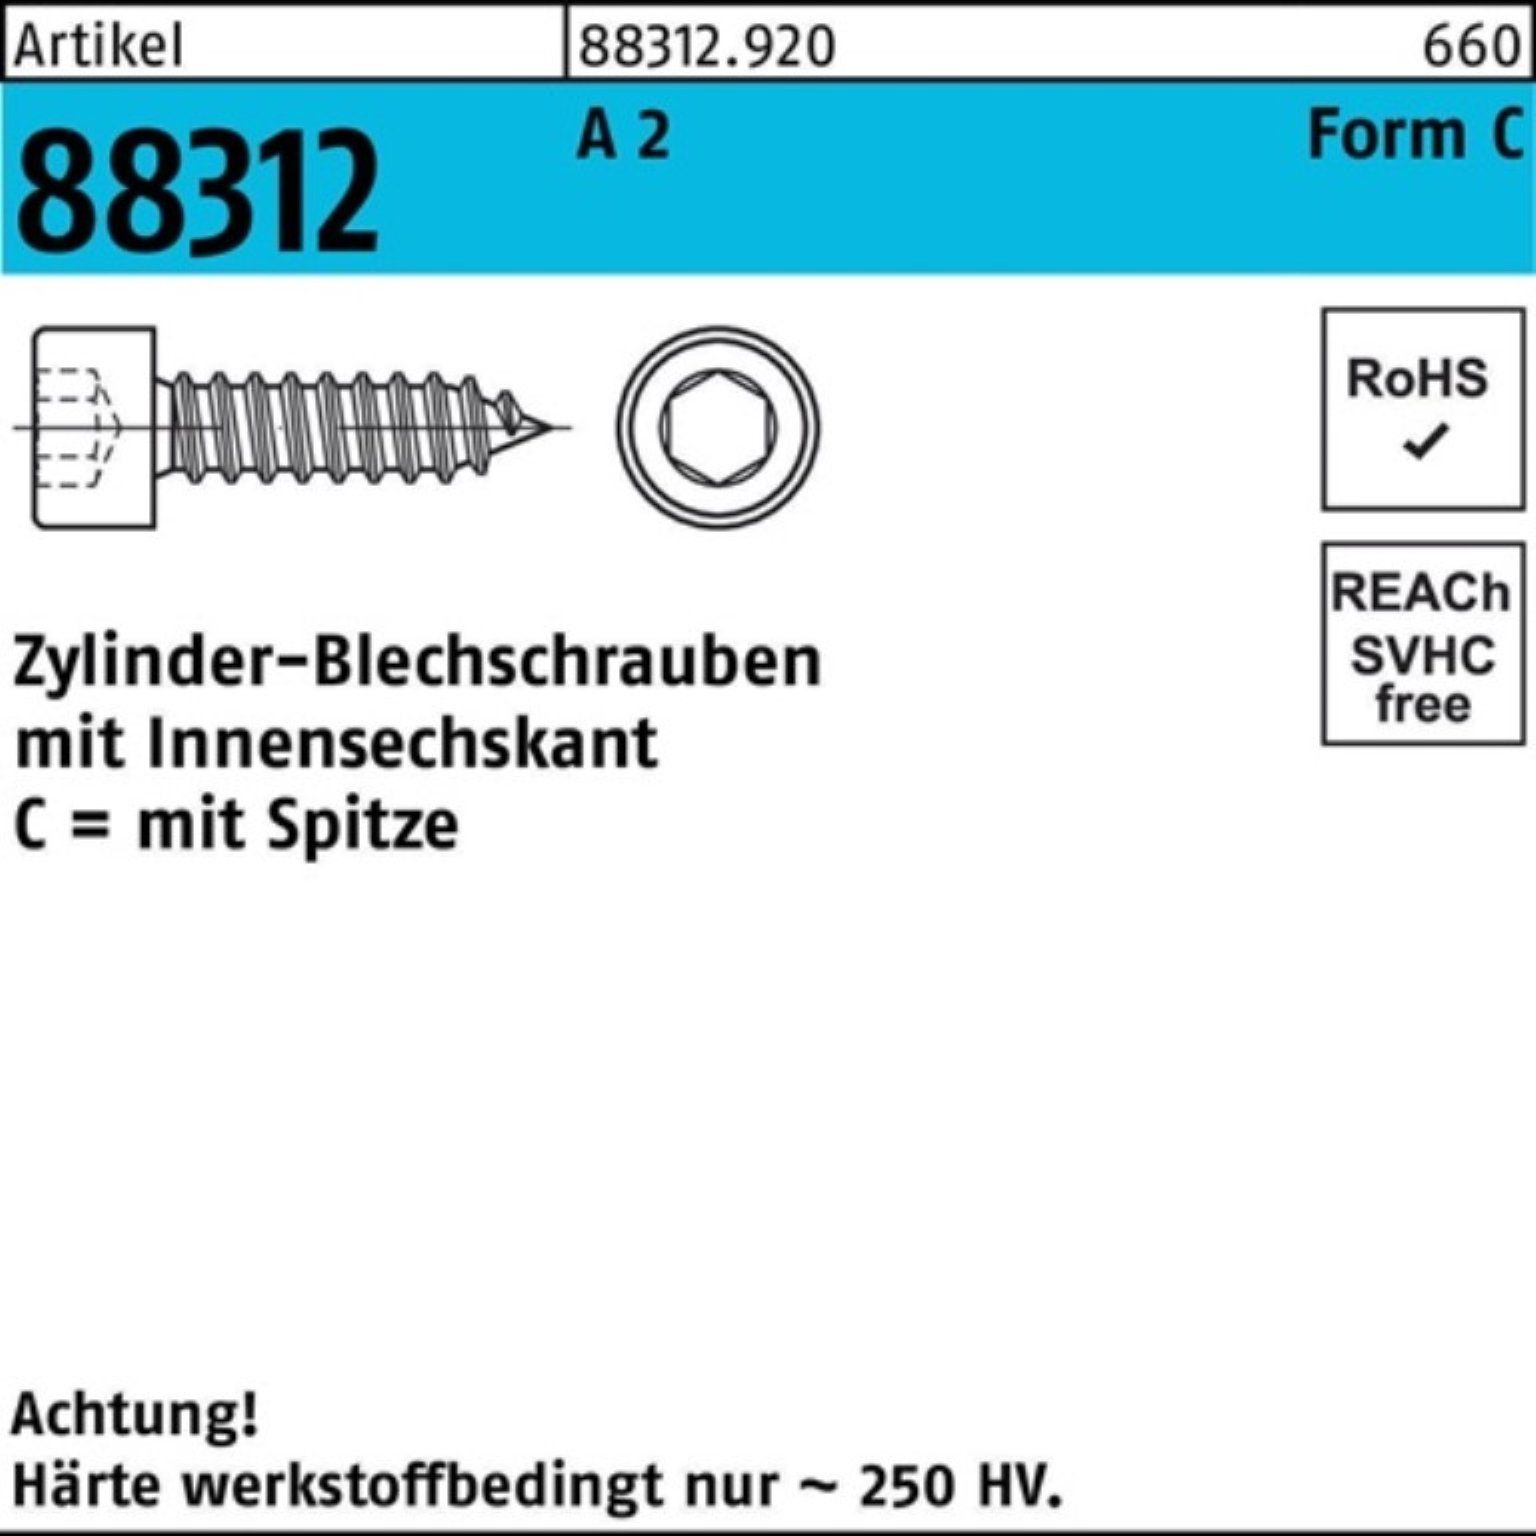 Reyher Blechschraube 200er Pack Zylinderblechschraube 88312 R 70 C A Spitze/Innen-6kt 6,3x